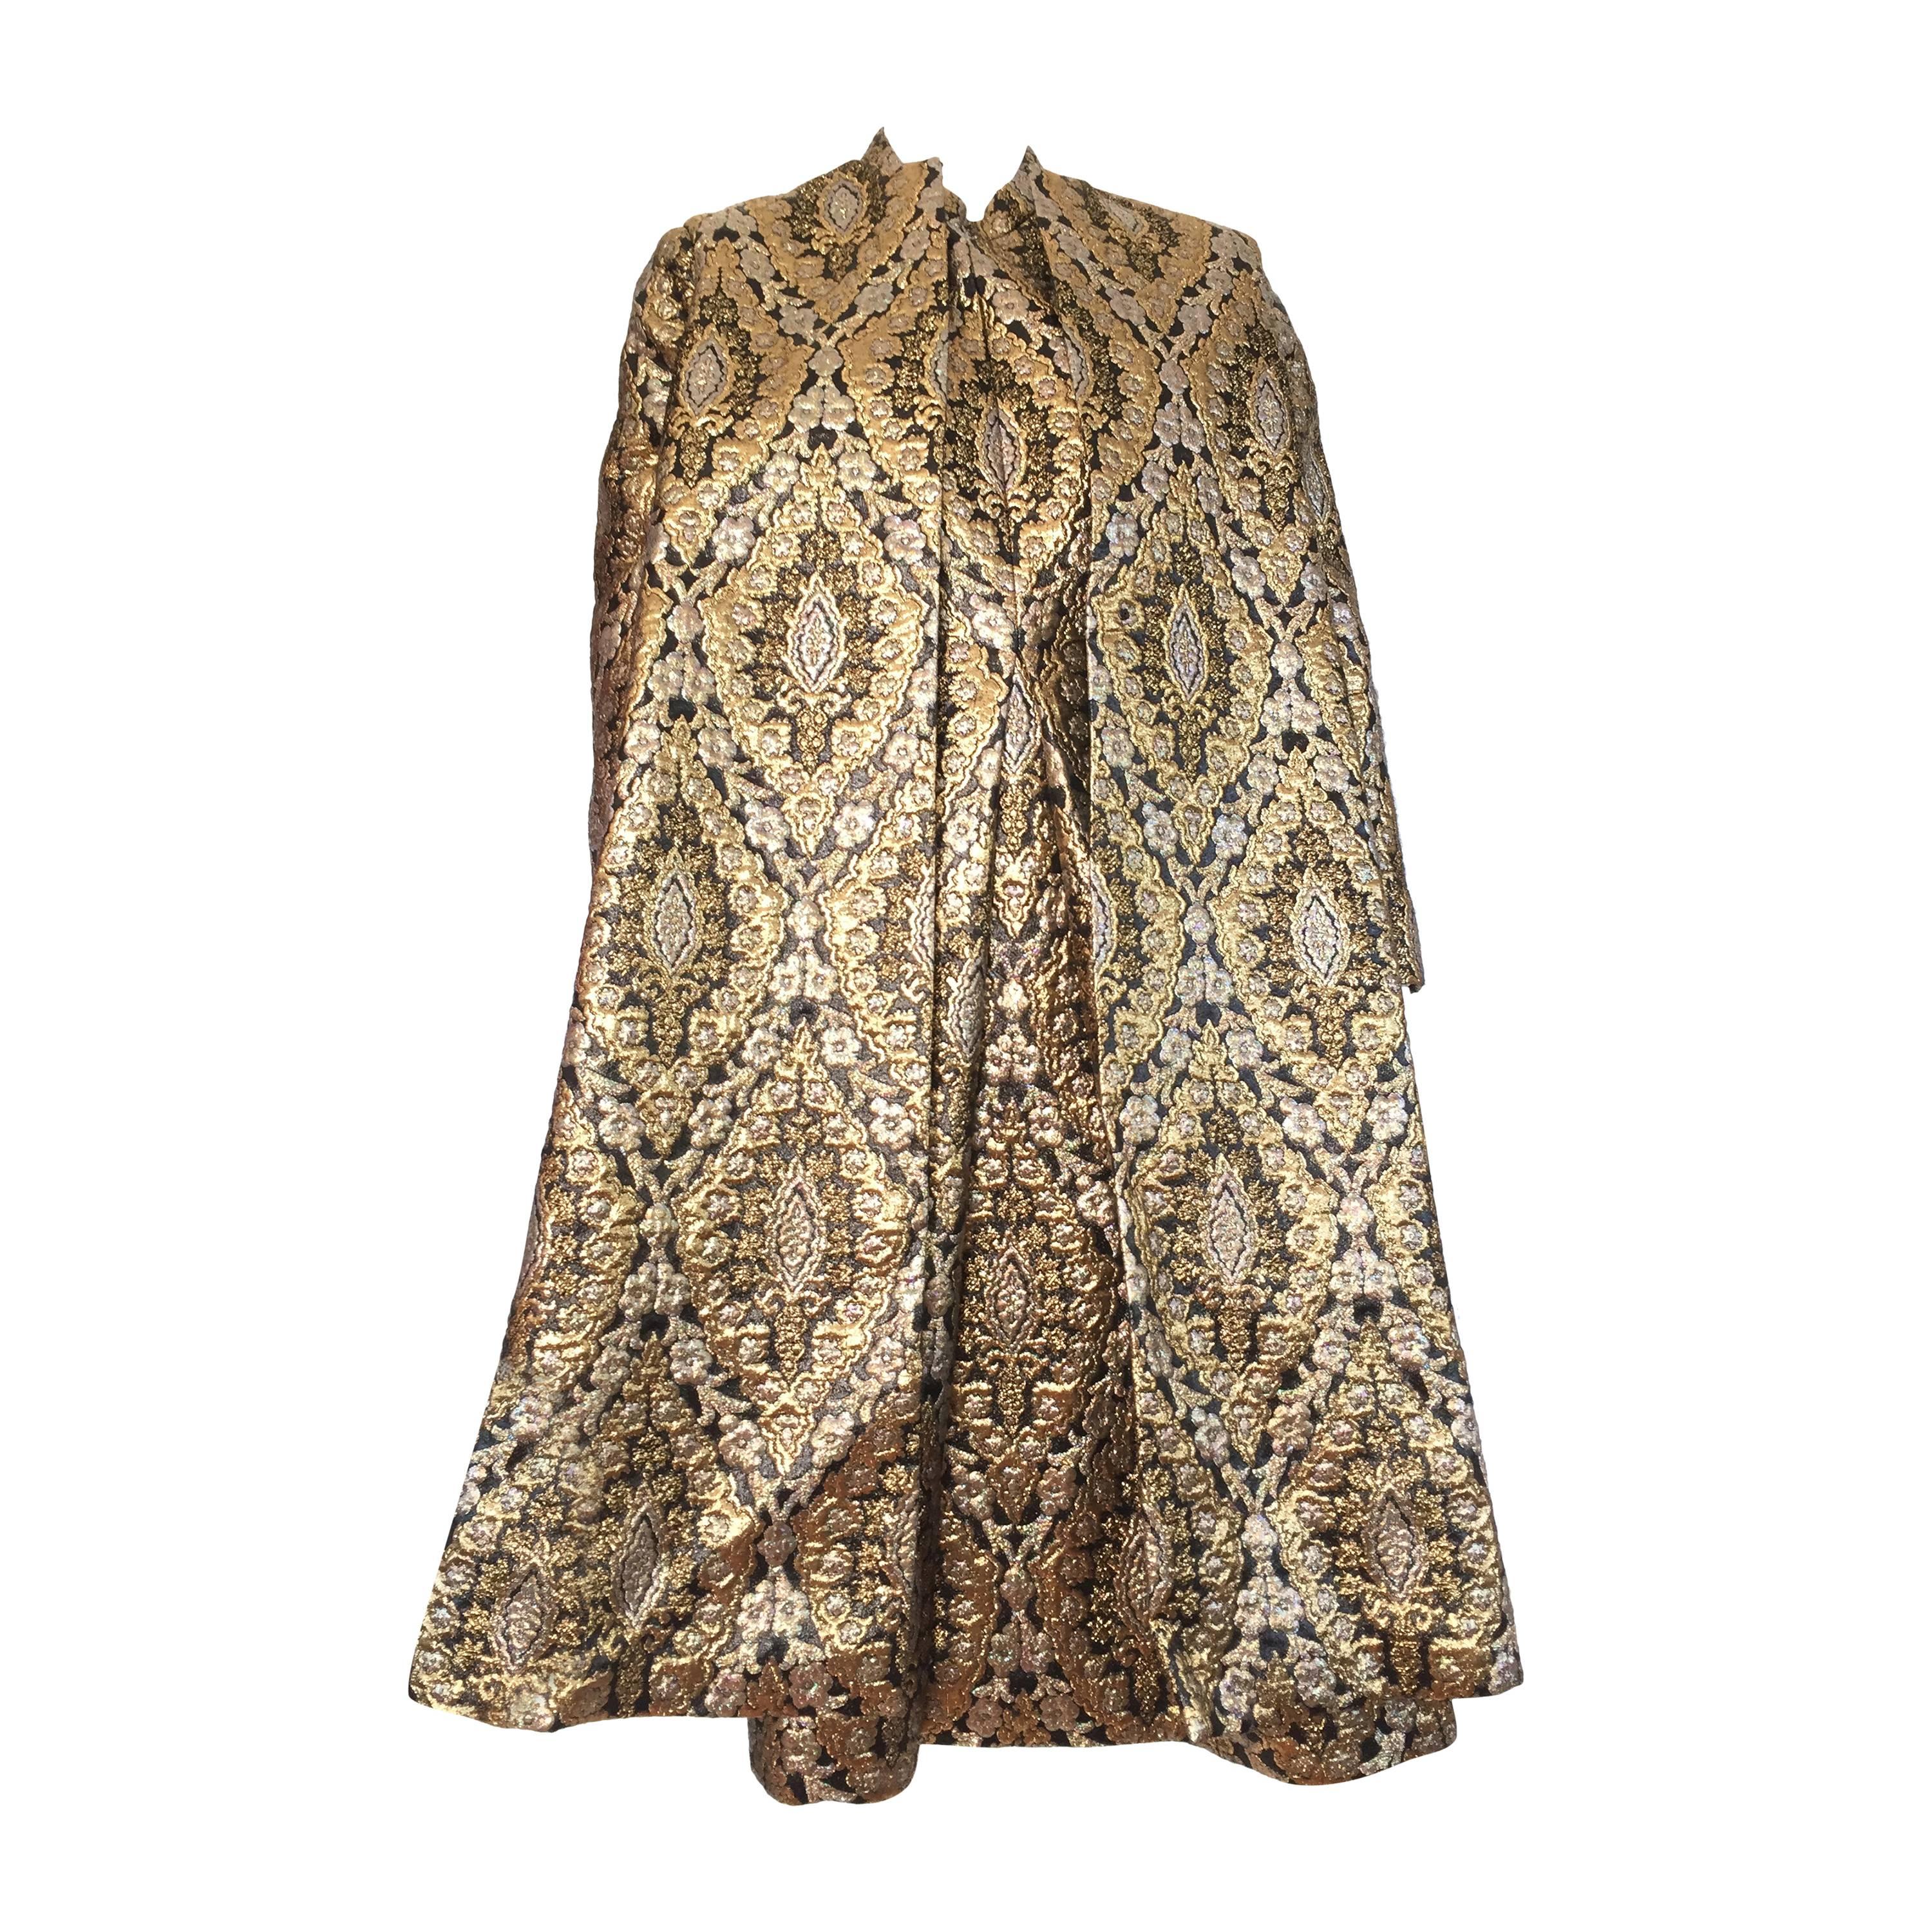 Richard Tam 1961 Silk Brocade Evening Dress & Coat Size 12 / 14.